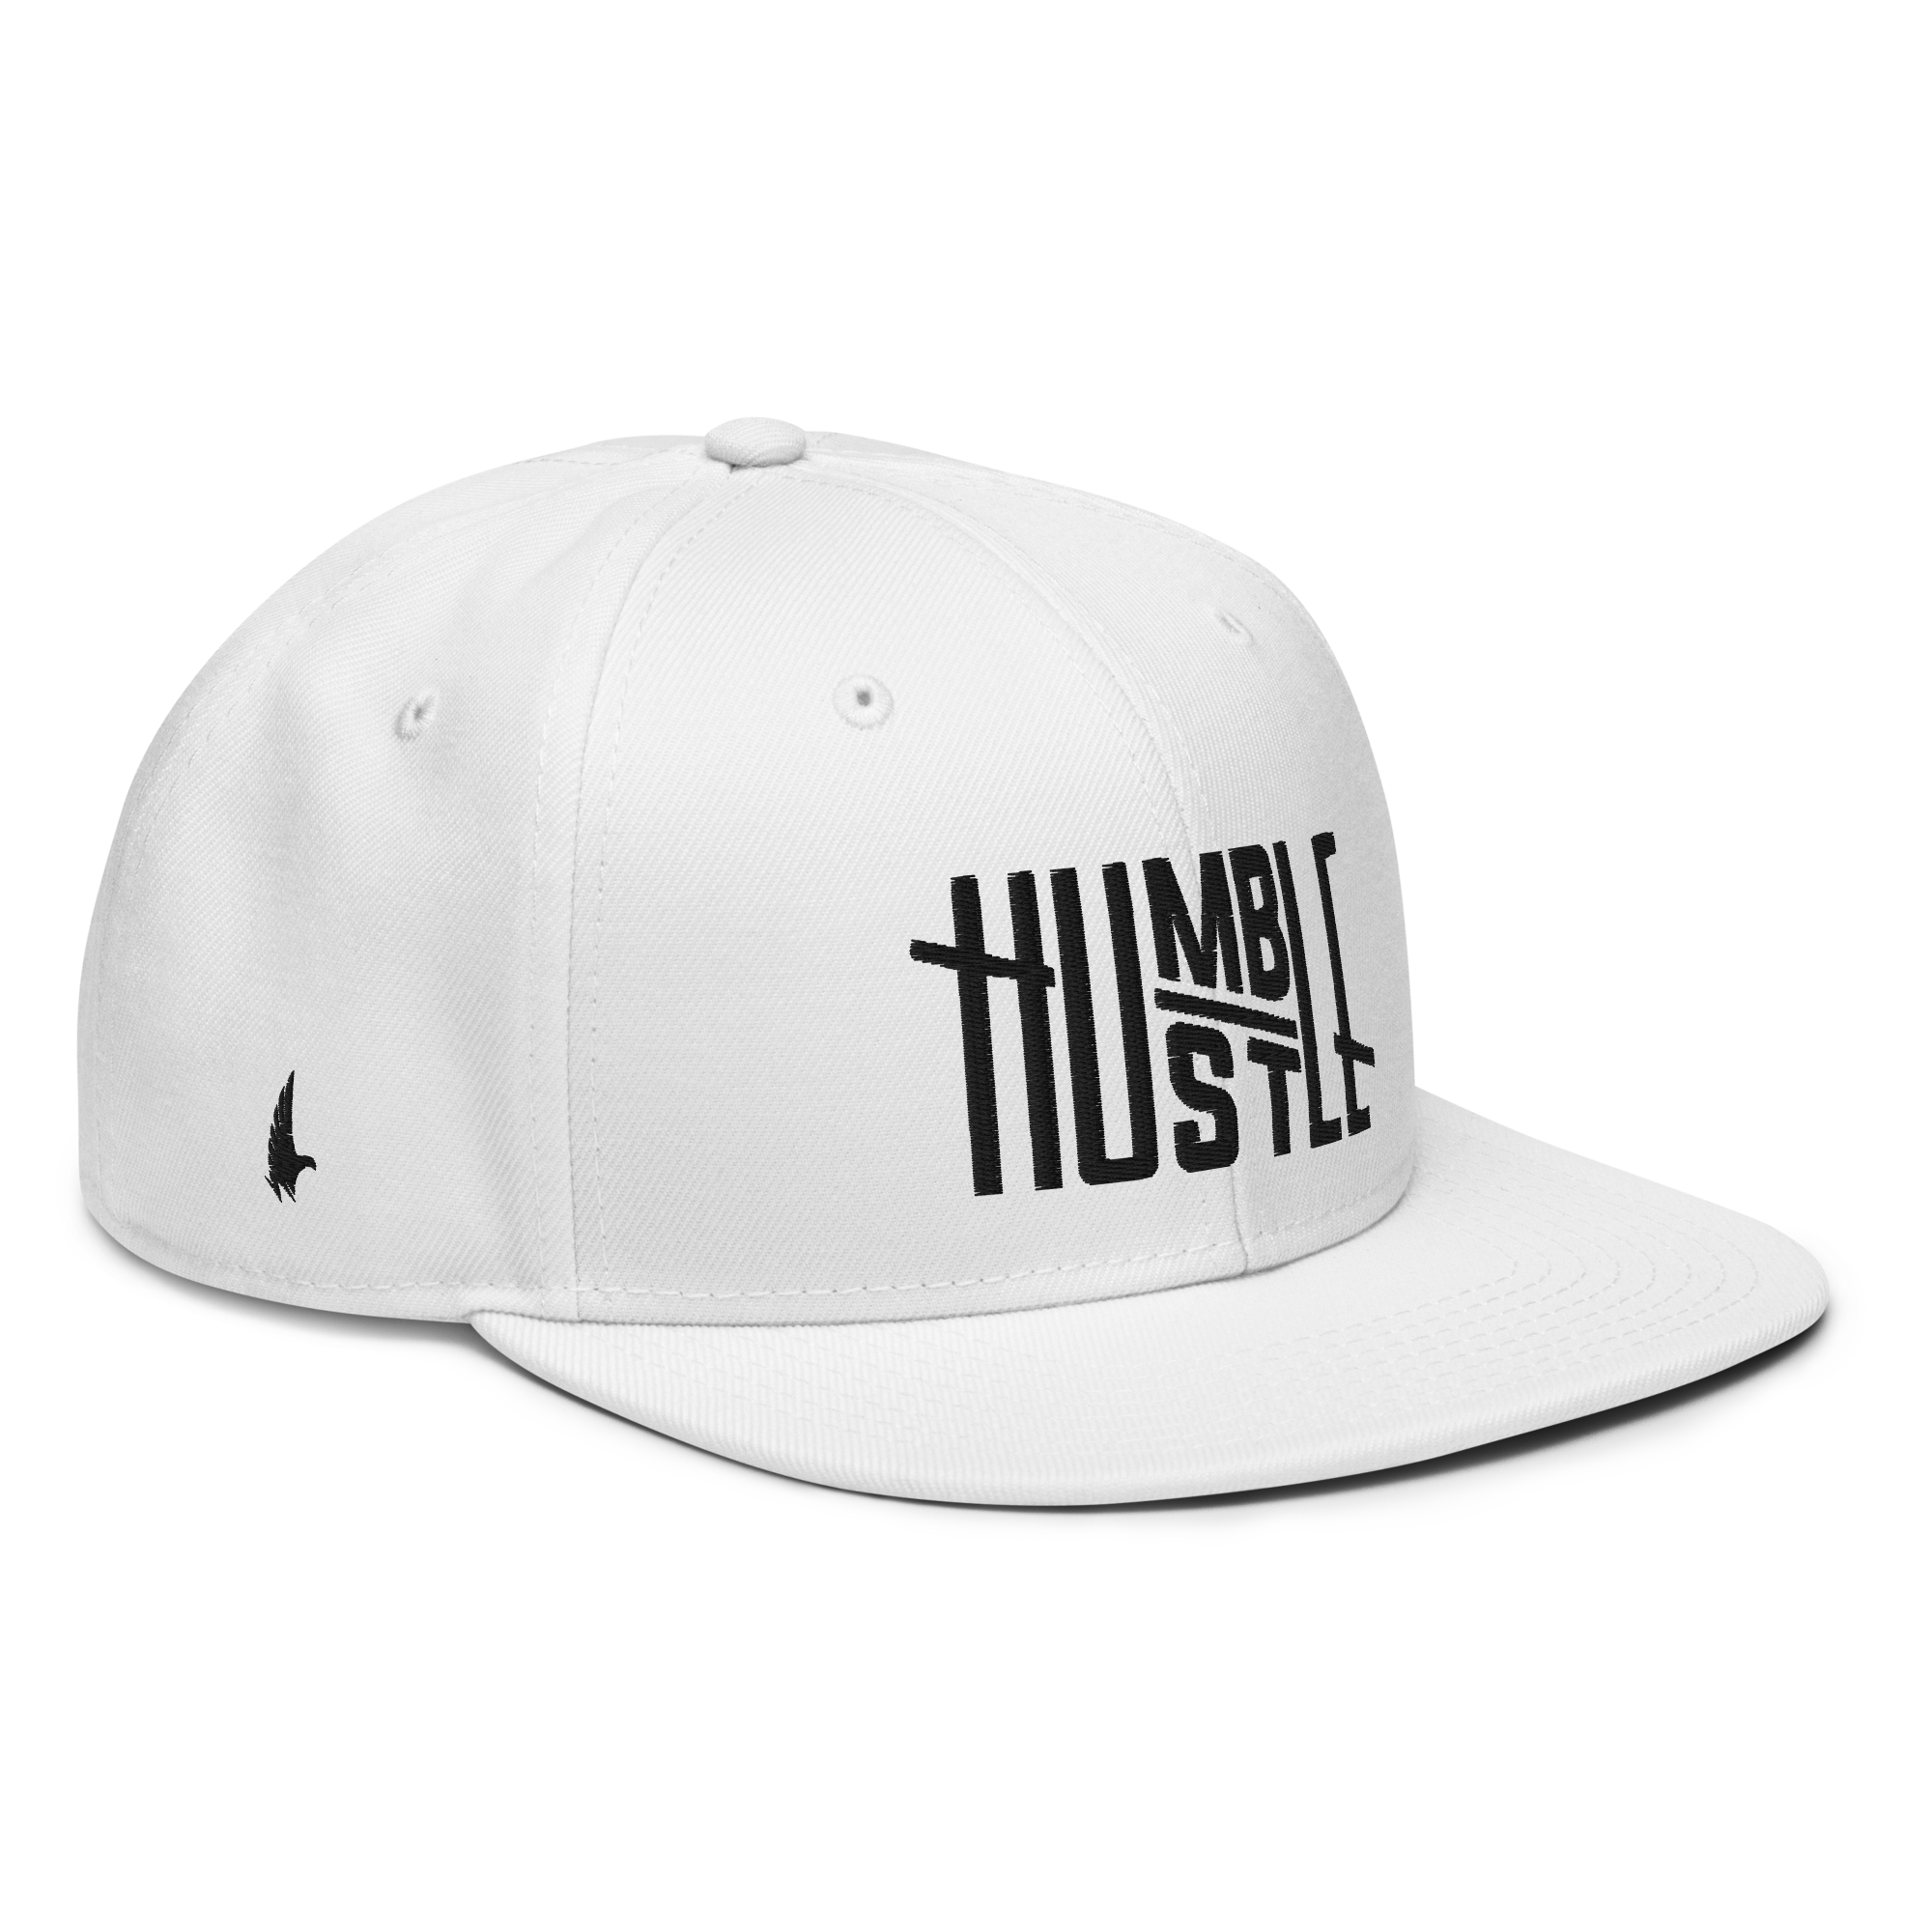 Humble Hustle Snapback Hat - White/Black OS - Loyalty Vibes